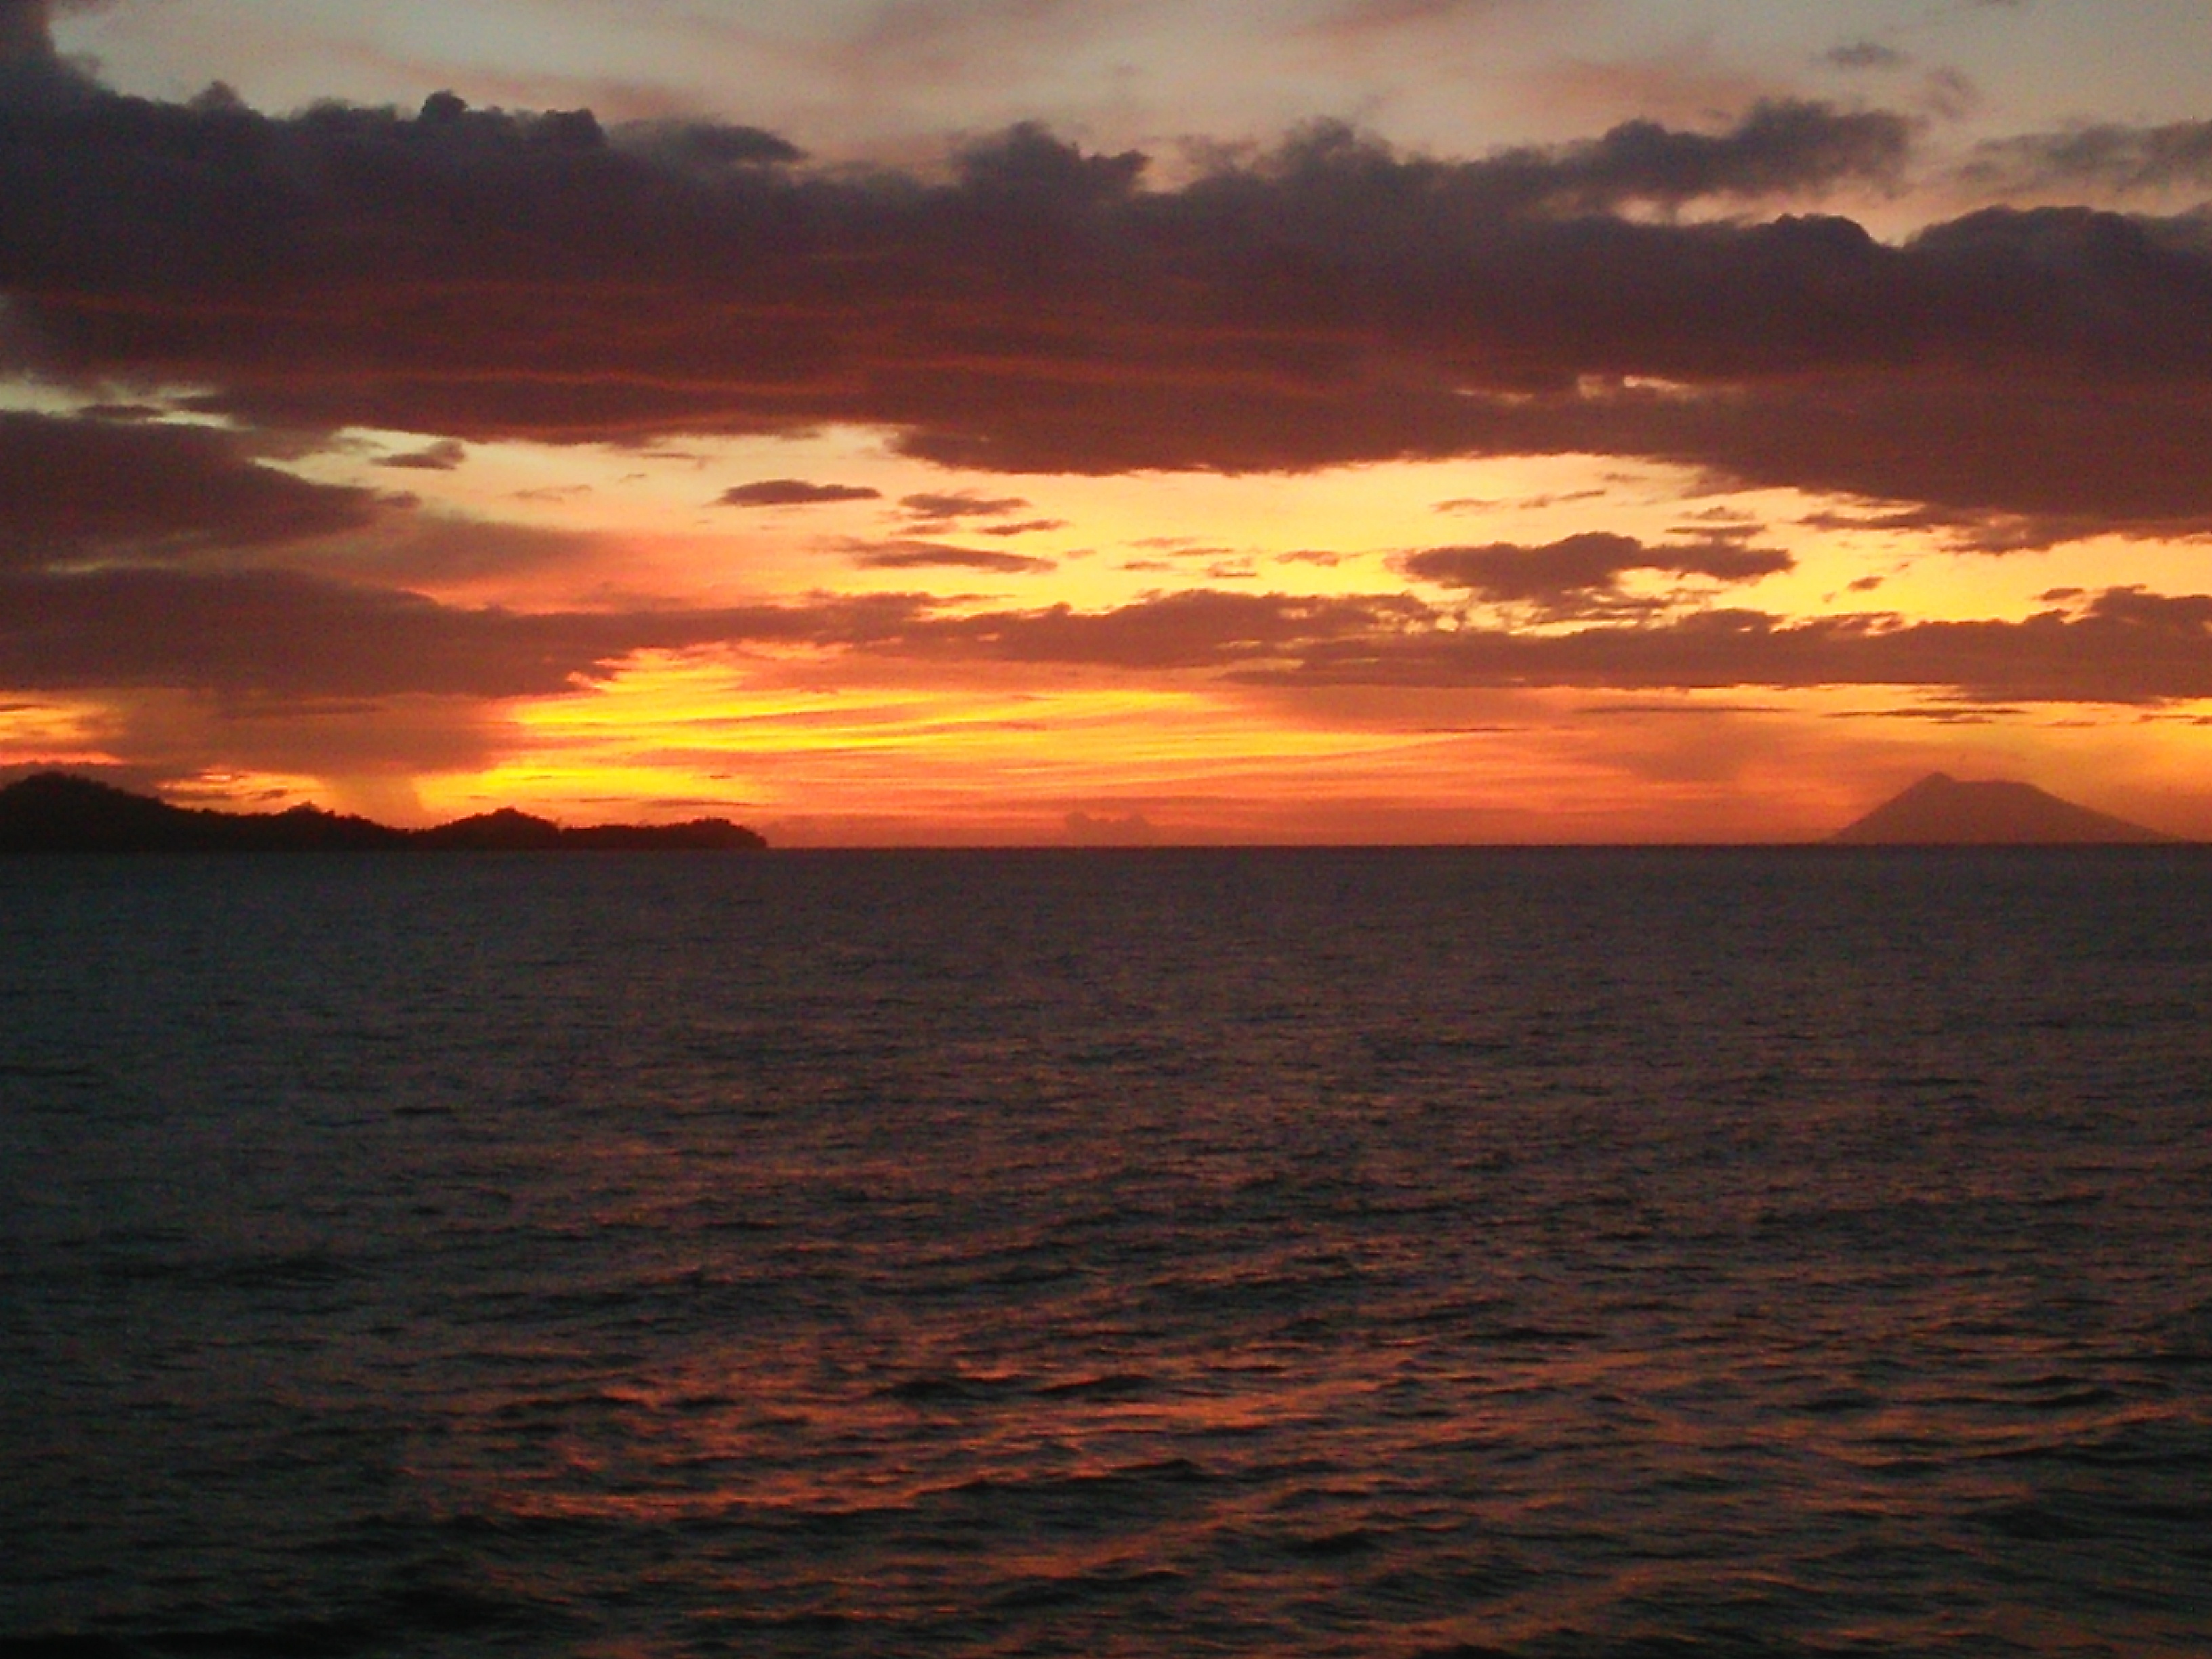 File:Sunset View on the Sunda Strait.jpg - Wikimedia Commons